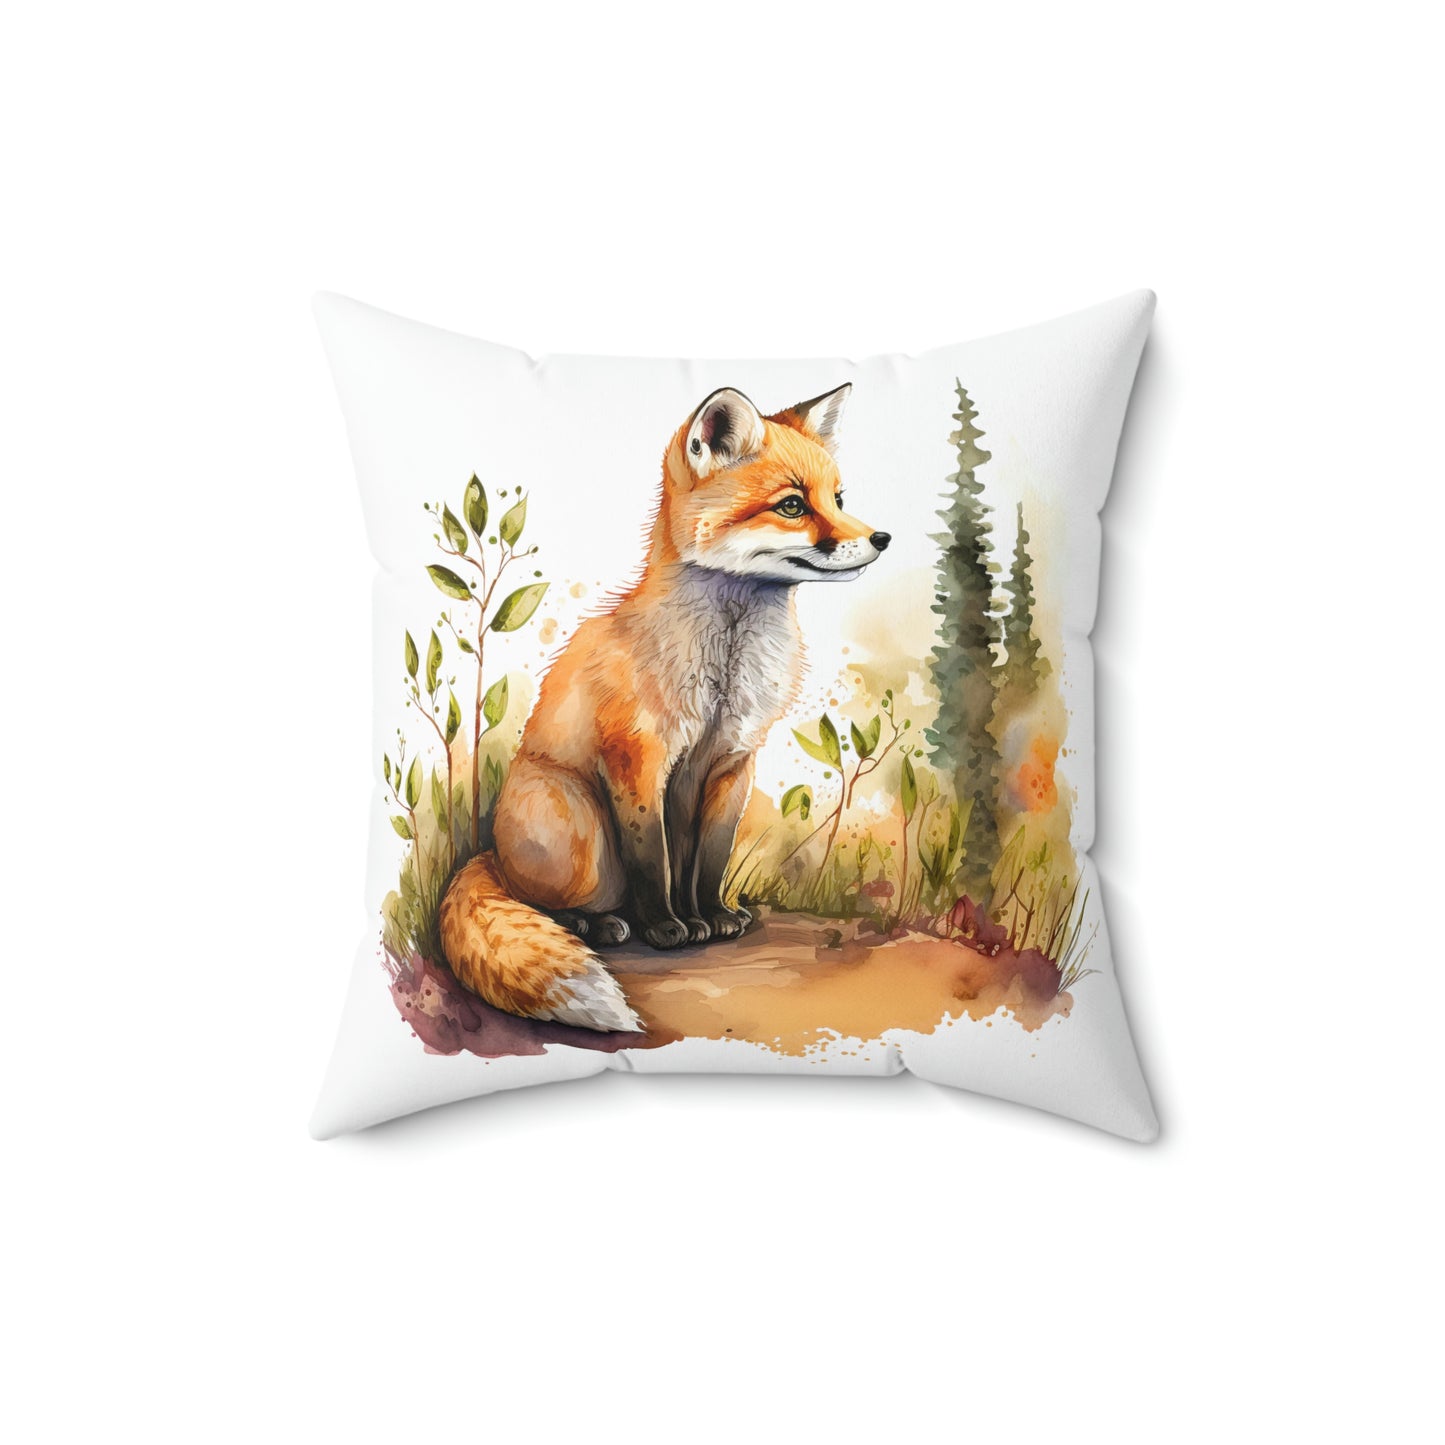 orange fox watercolor design on a square accent throw pillow, watercolor fox design on a throw pillow sitting on a couch, fox couch pillow accent for your living room decor